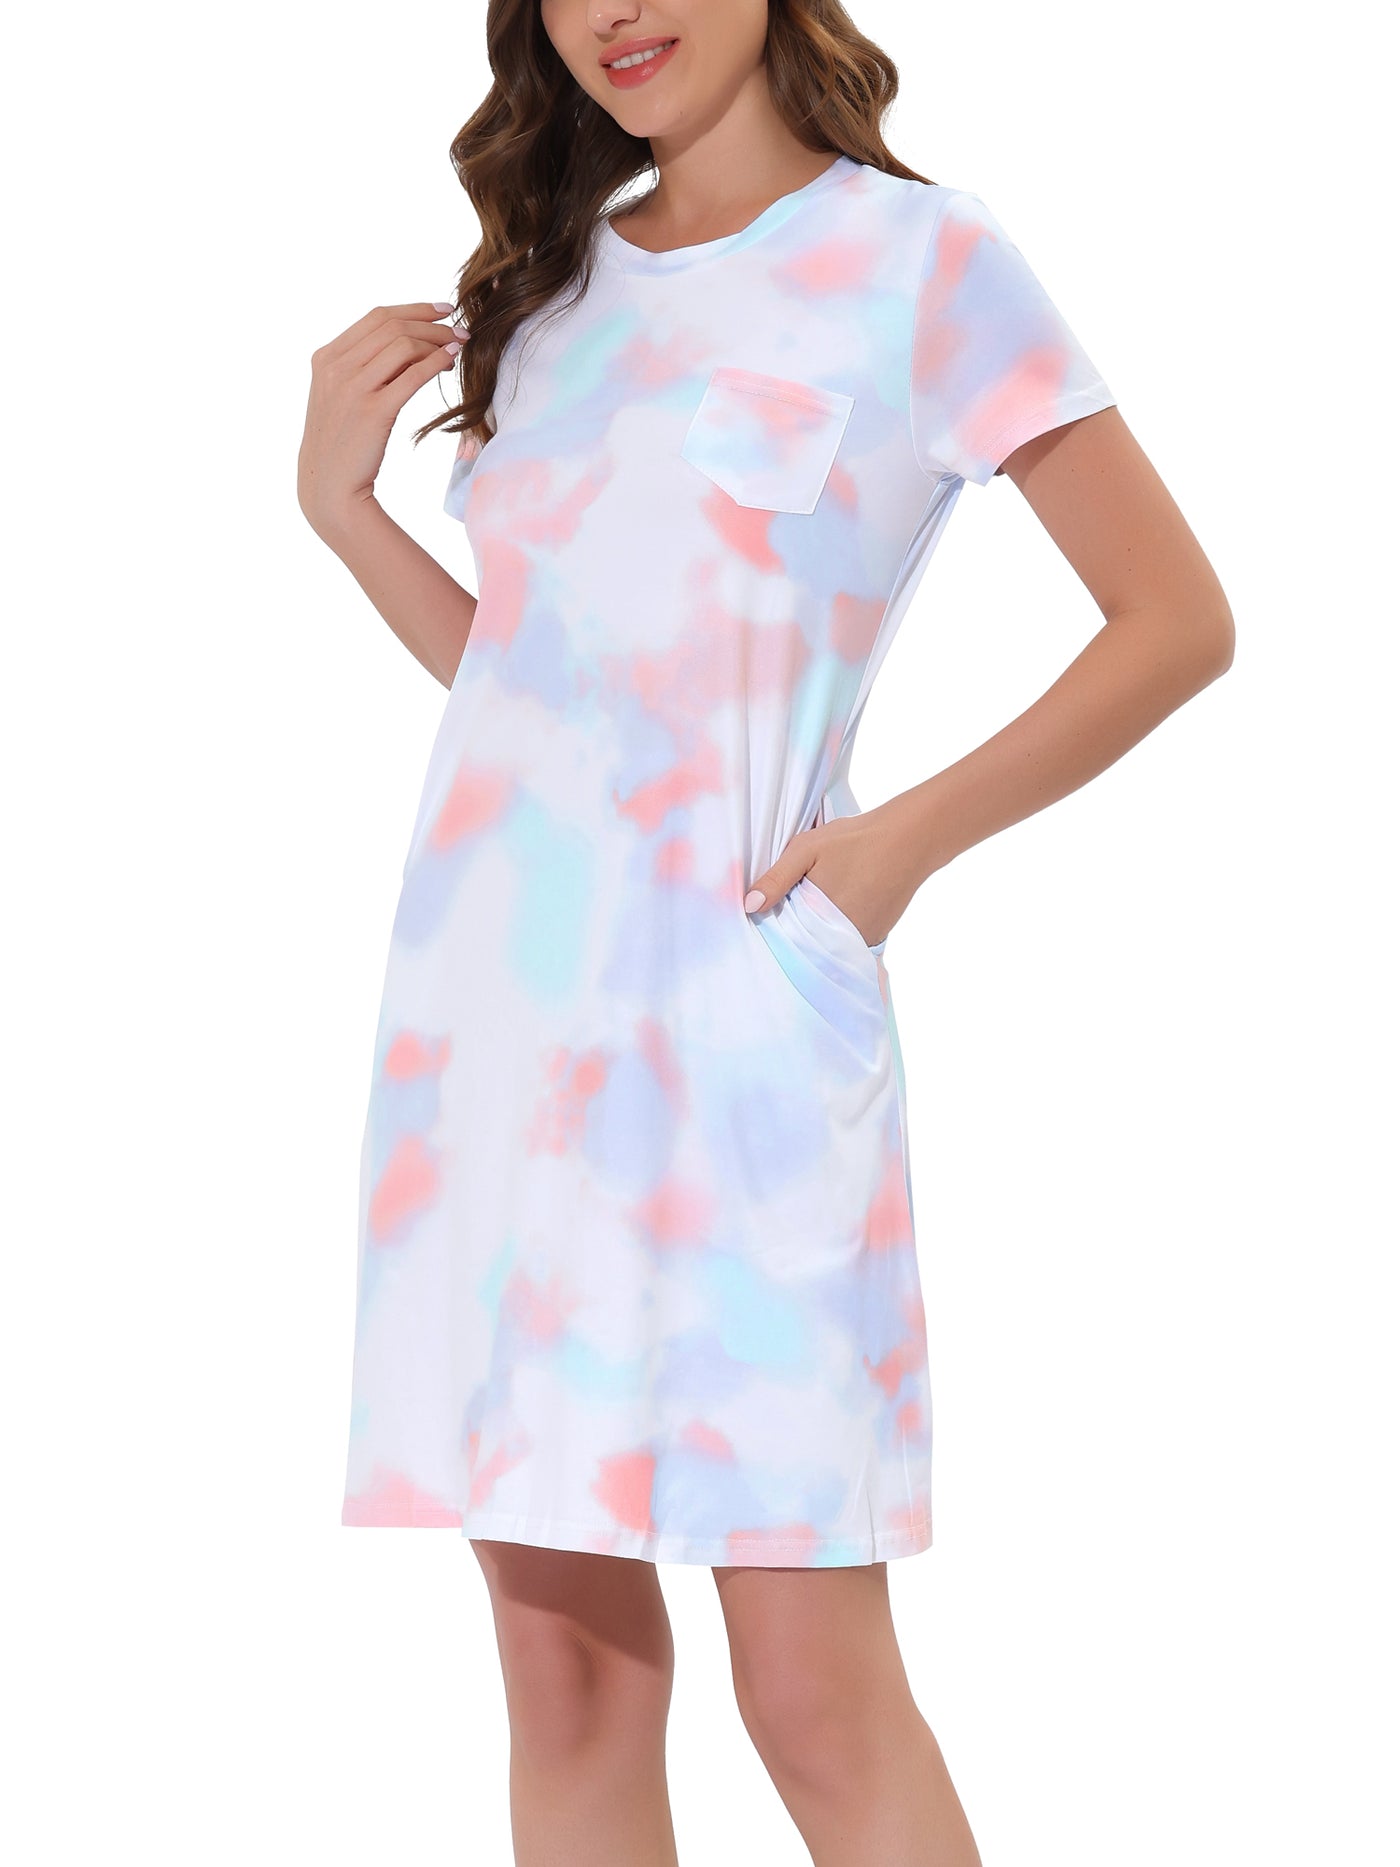 Bublédon Women's Pajama Dress Sleepwear Strtechy with Pockets Nightshirt Lounge Nightgown